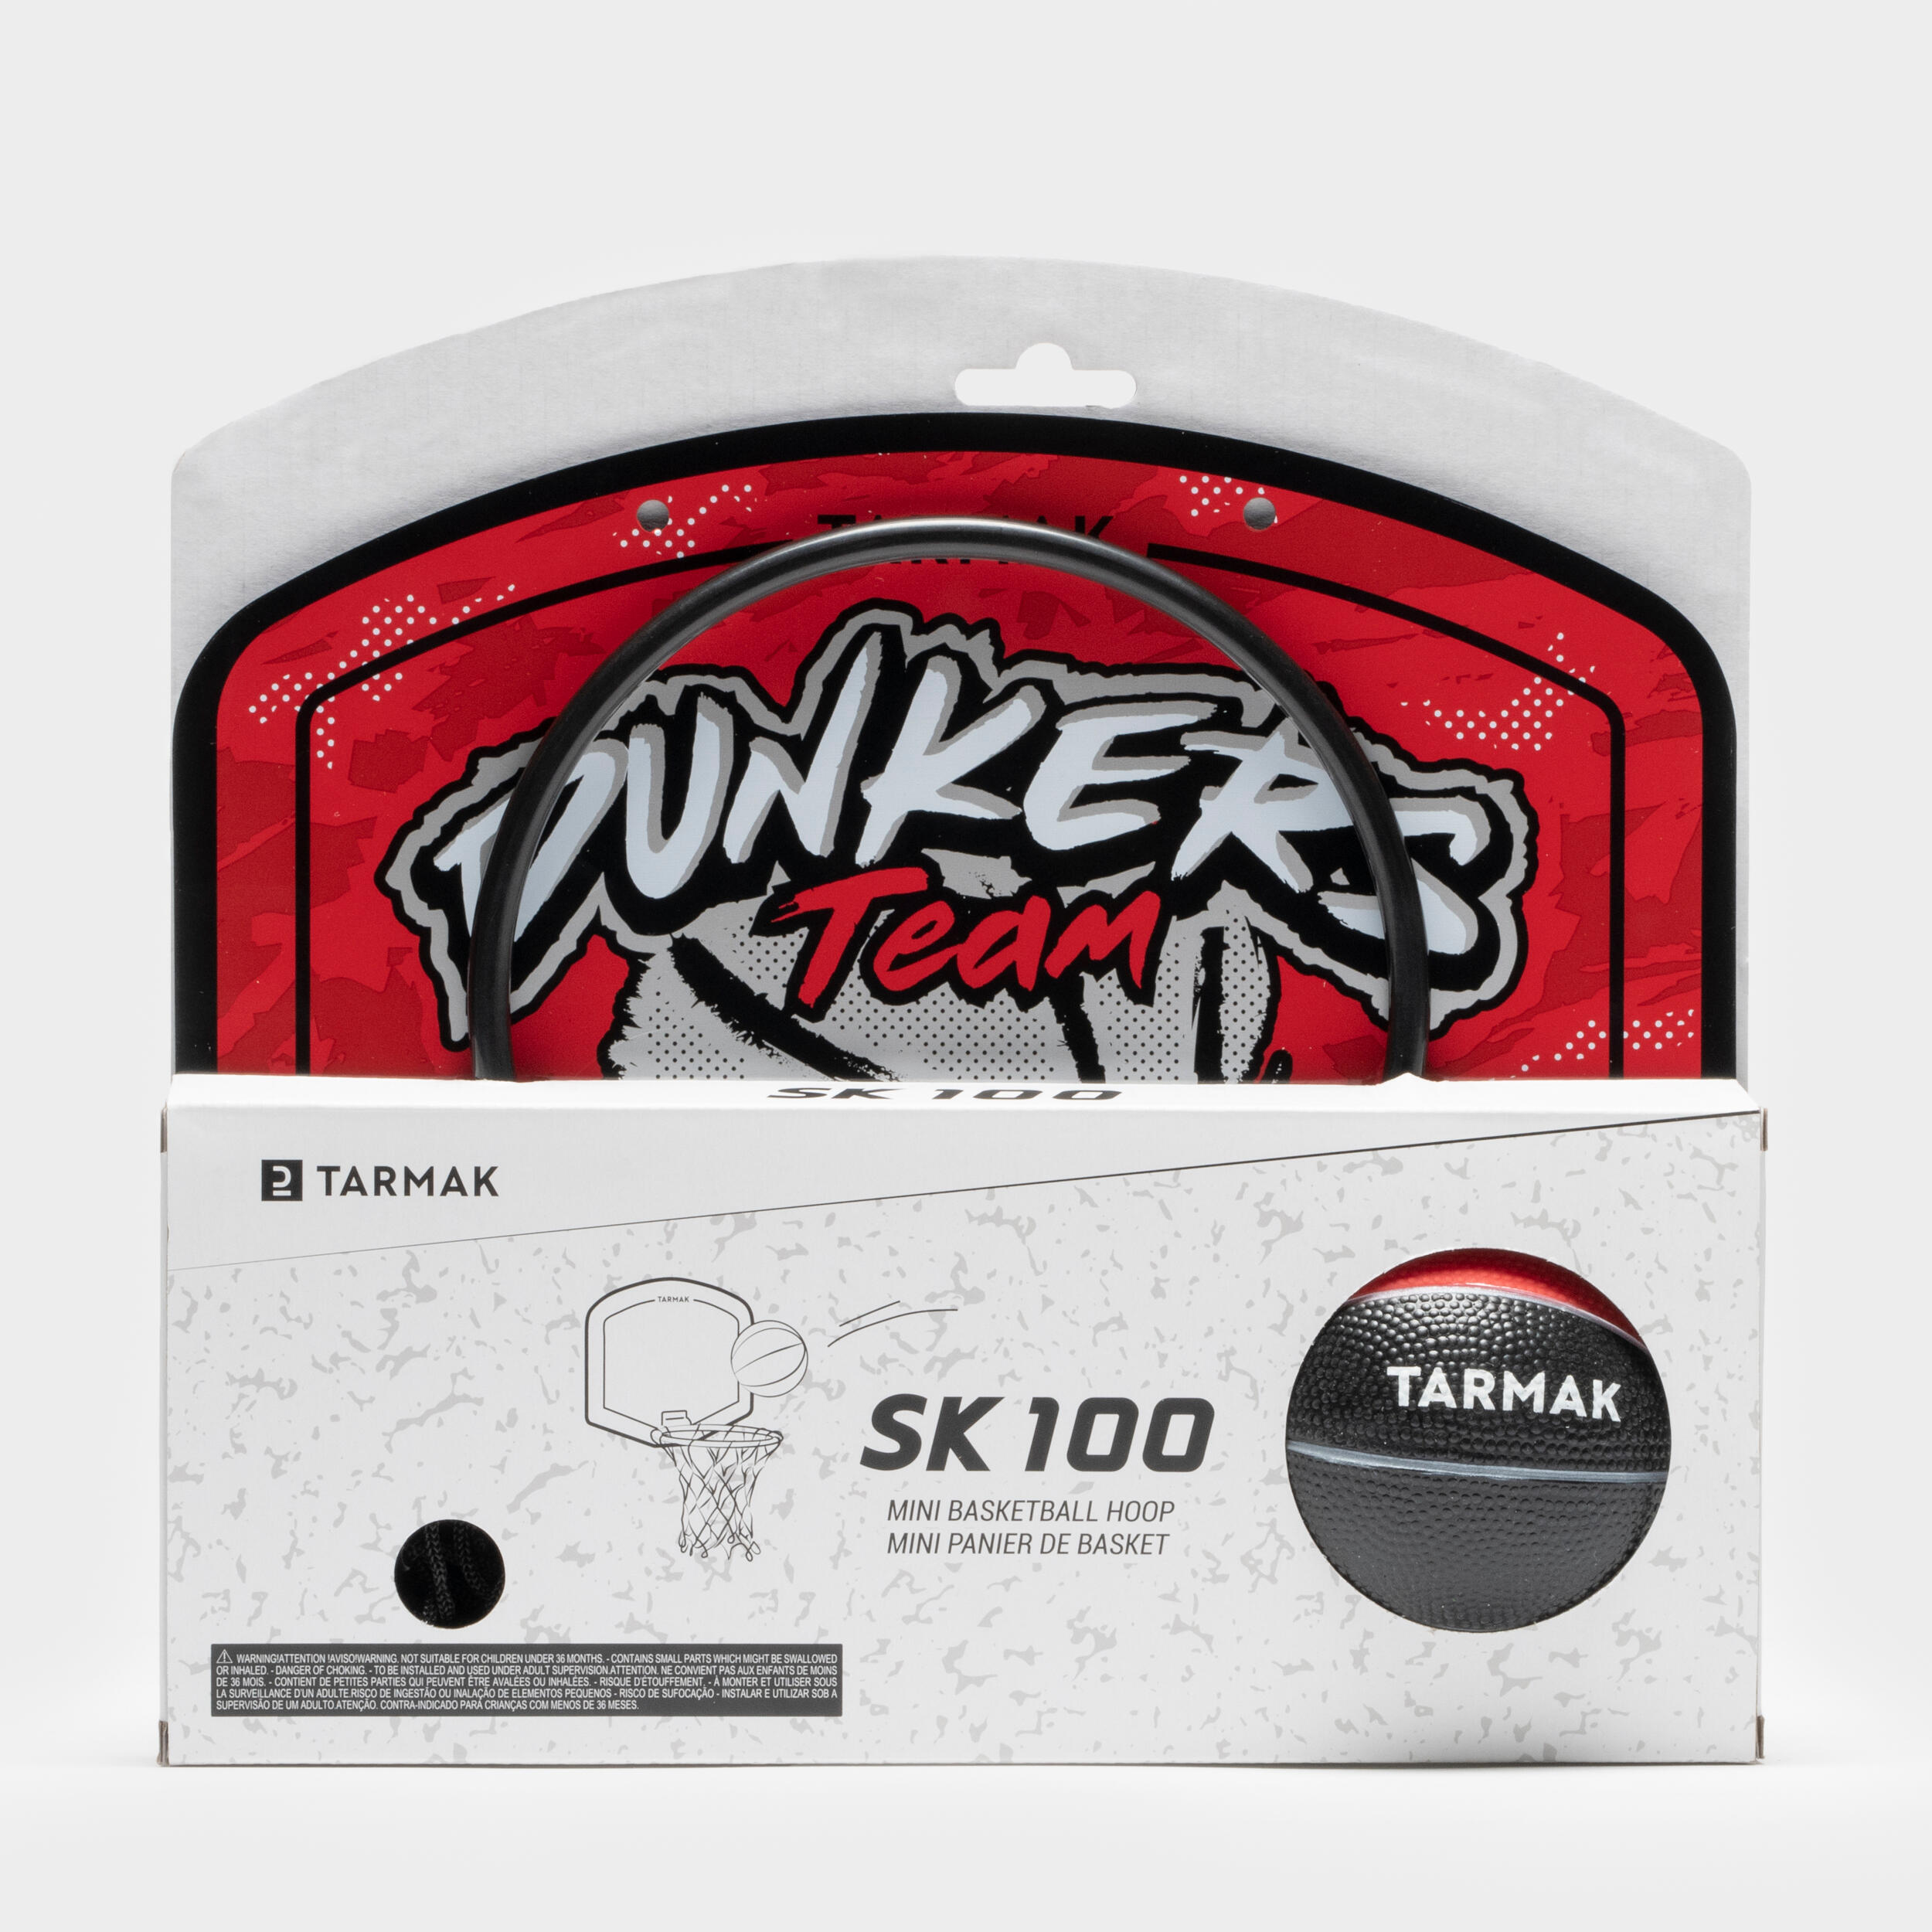 Kids'/Adult Mini Basketball Hoop SK100 Dunkers - Red/Silver 3/3